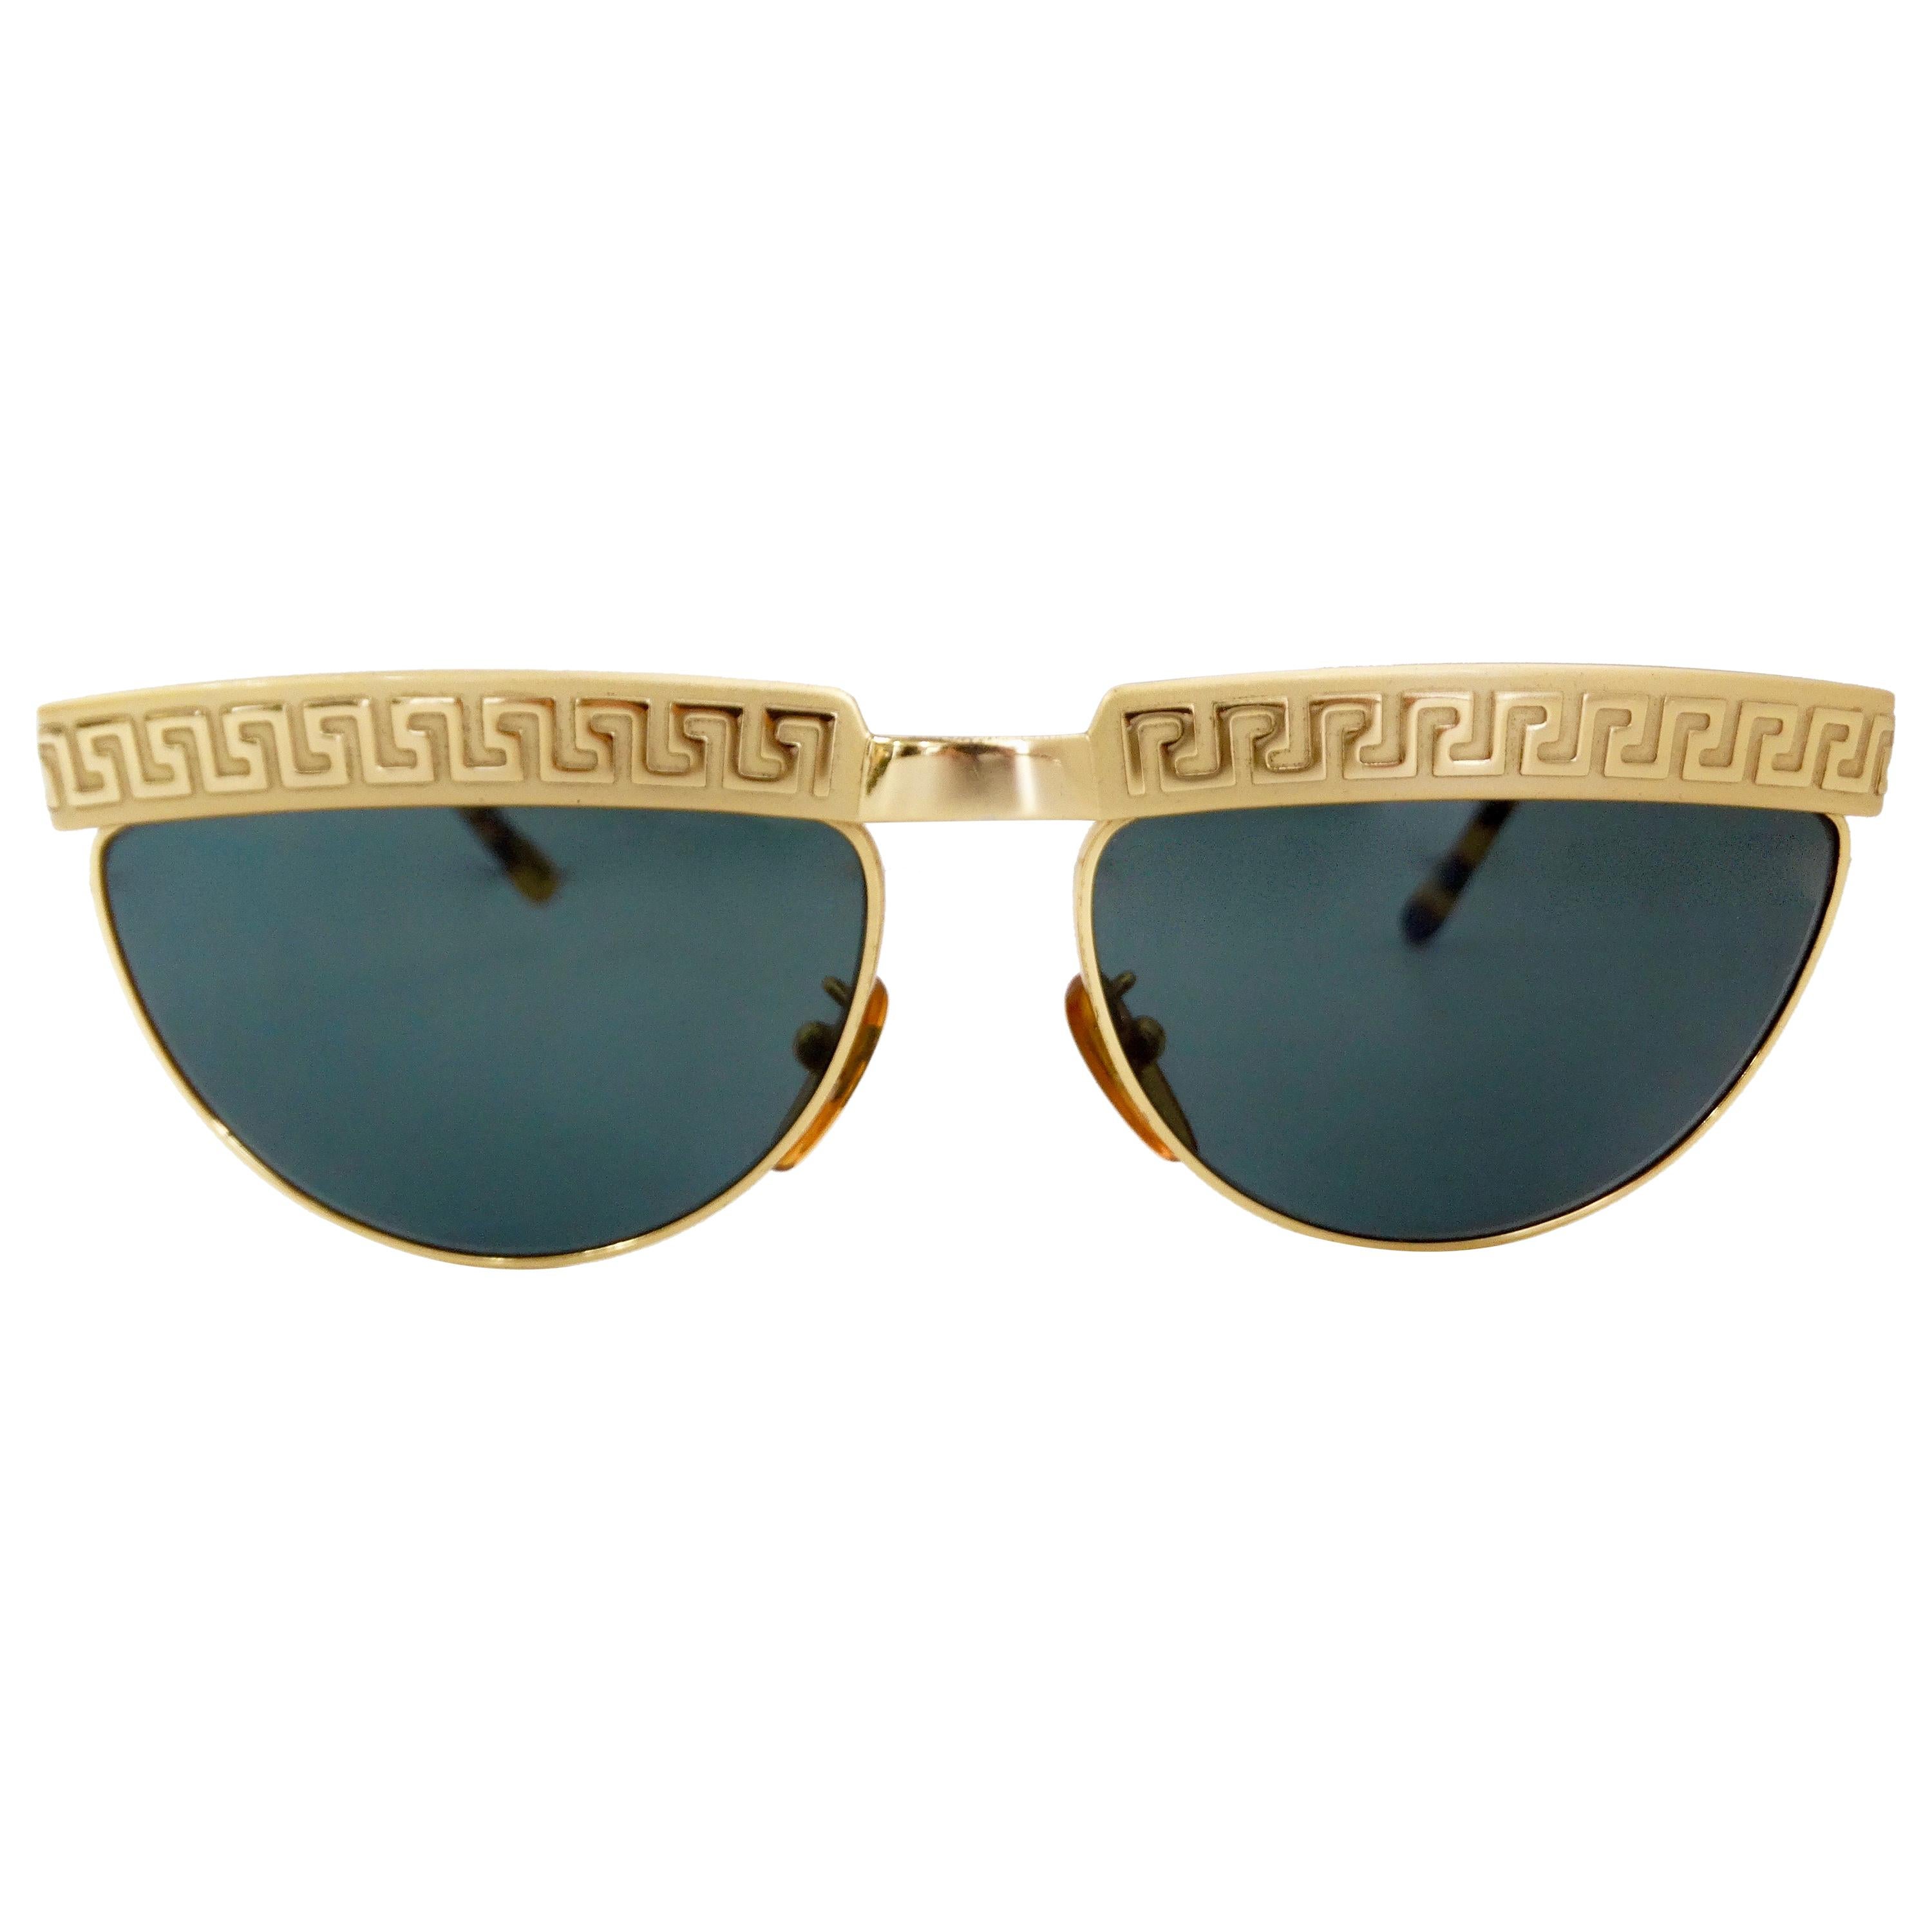 Gianni Versace 1990s Greek Key Sunglasses 